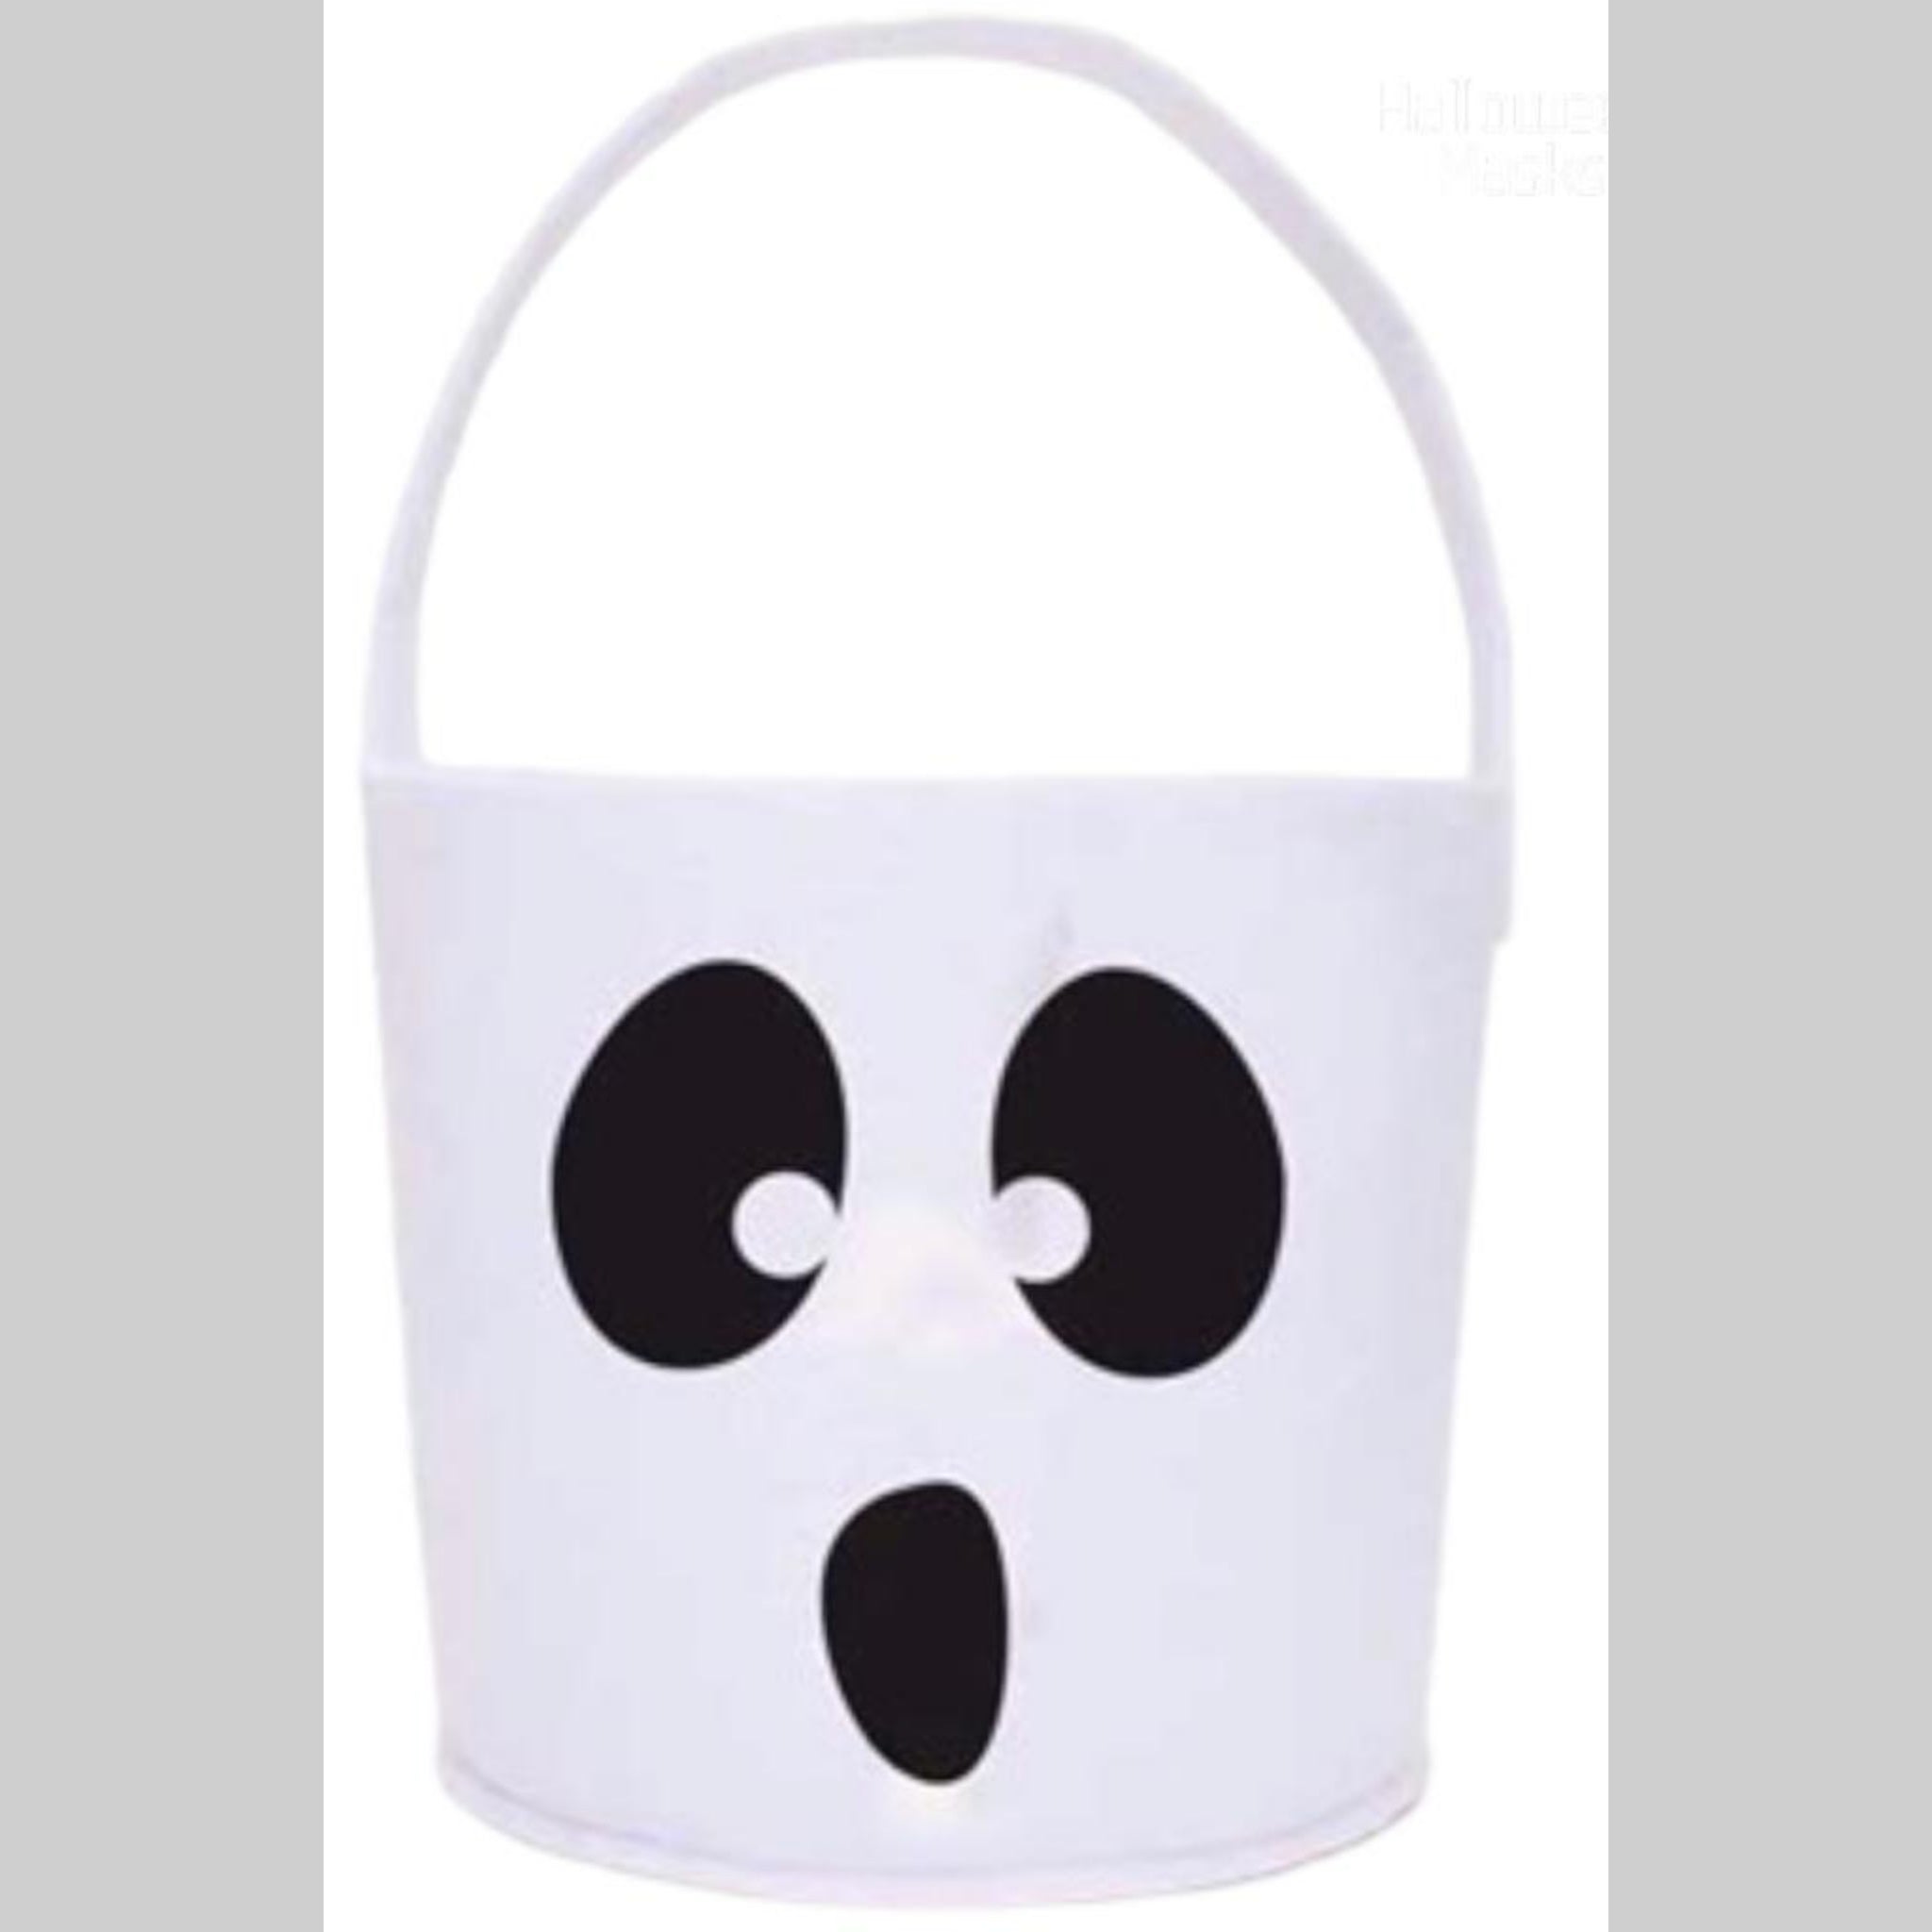 Beclen Harp Halloween Basket Trick Or Treat Pumpkin Tote Bags Loot Bucket Gift Candy Handbag Party 2Xbasket